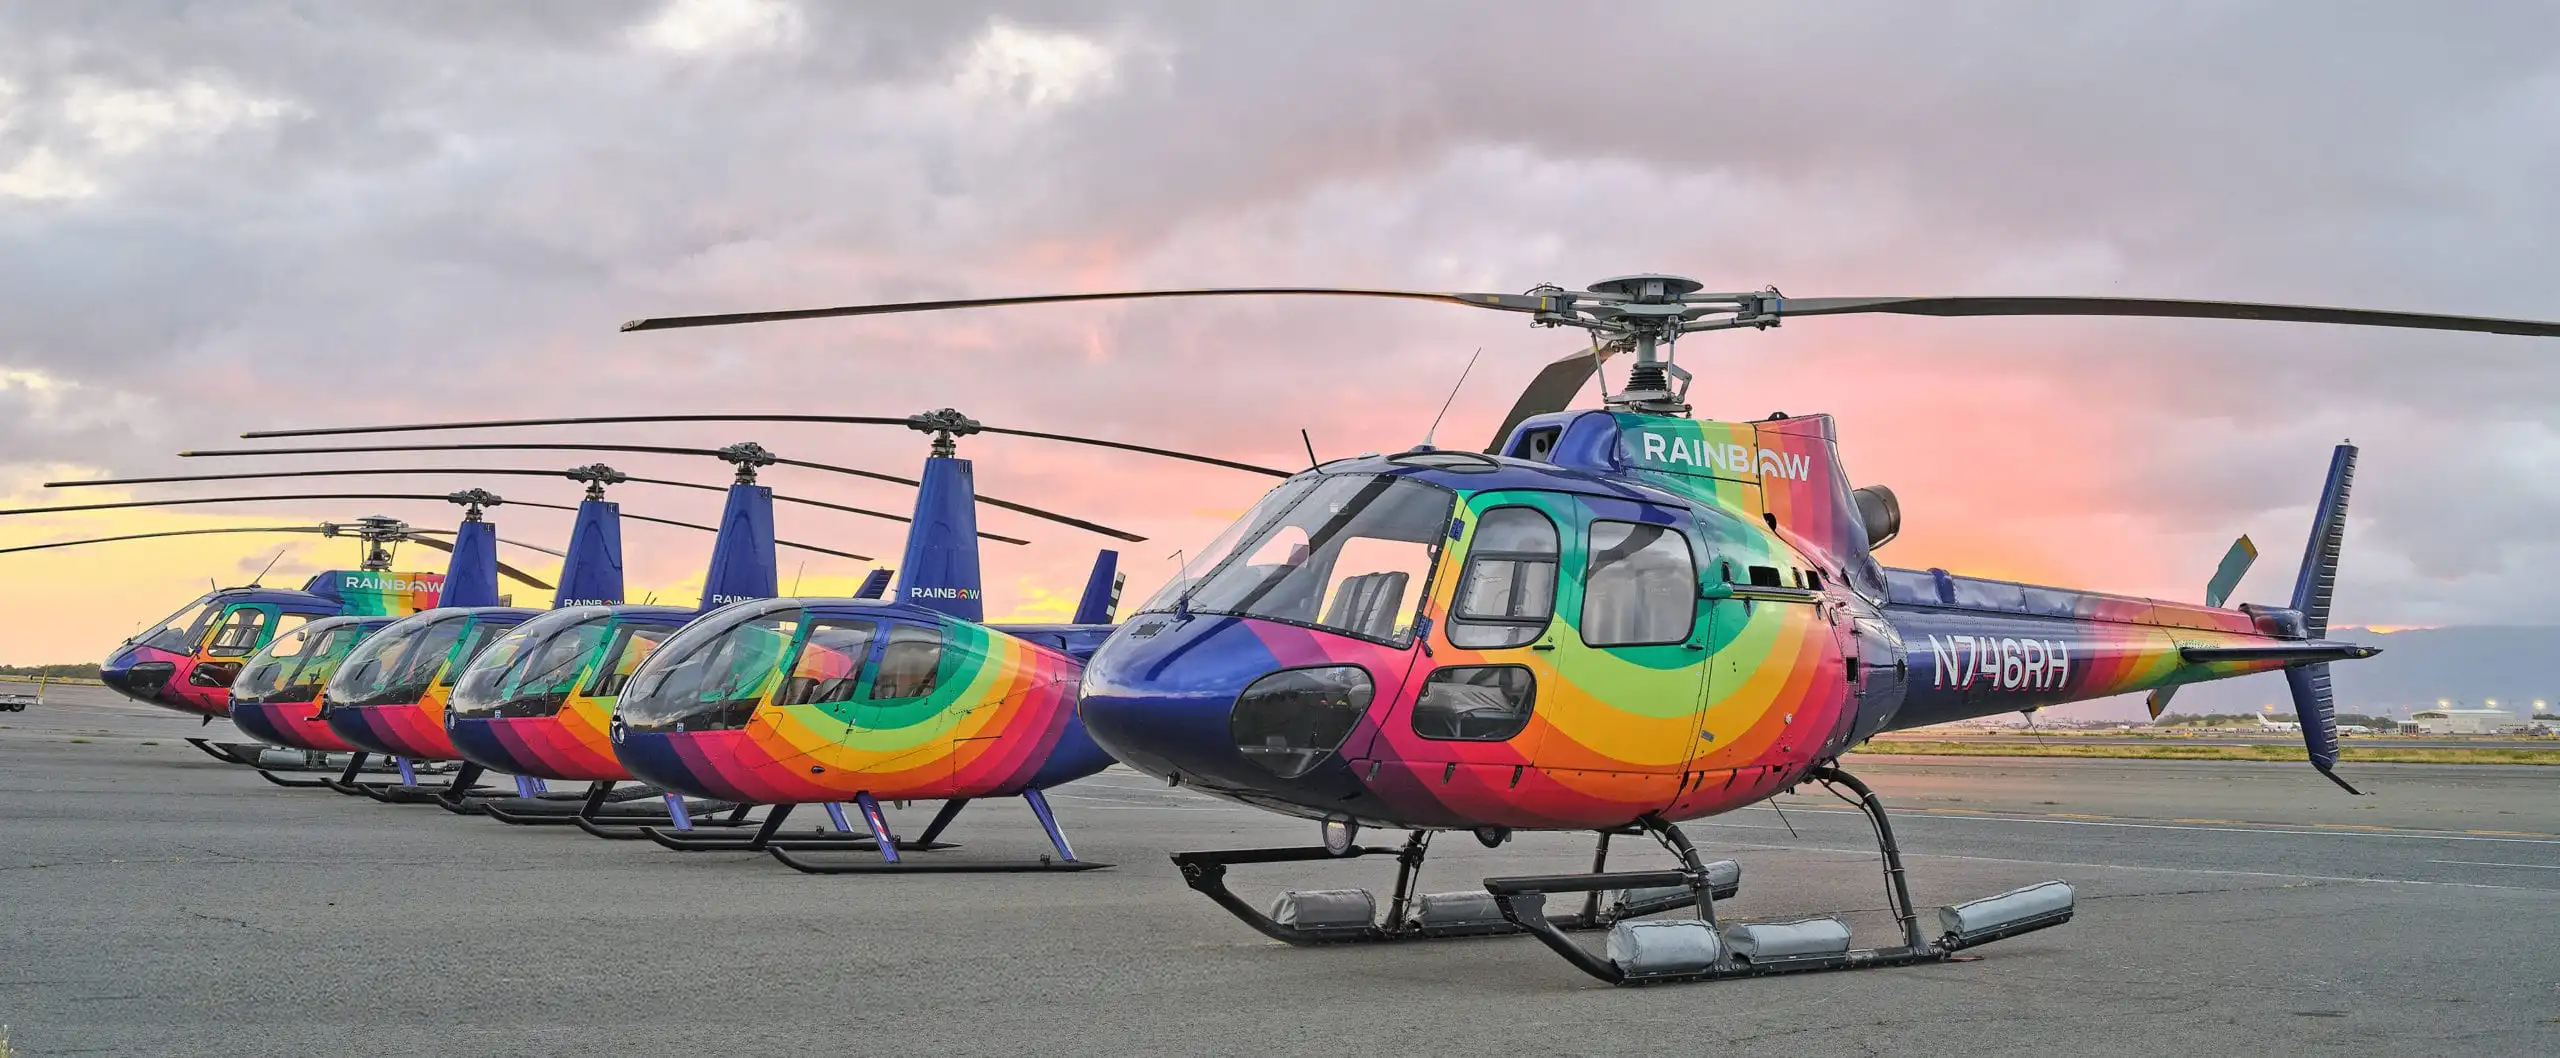 Fleet of Rainbow Helicopters at Honolulu International Airport